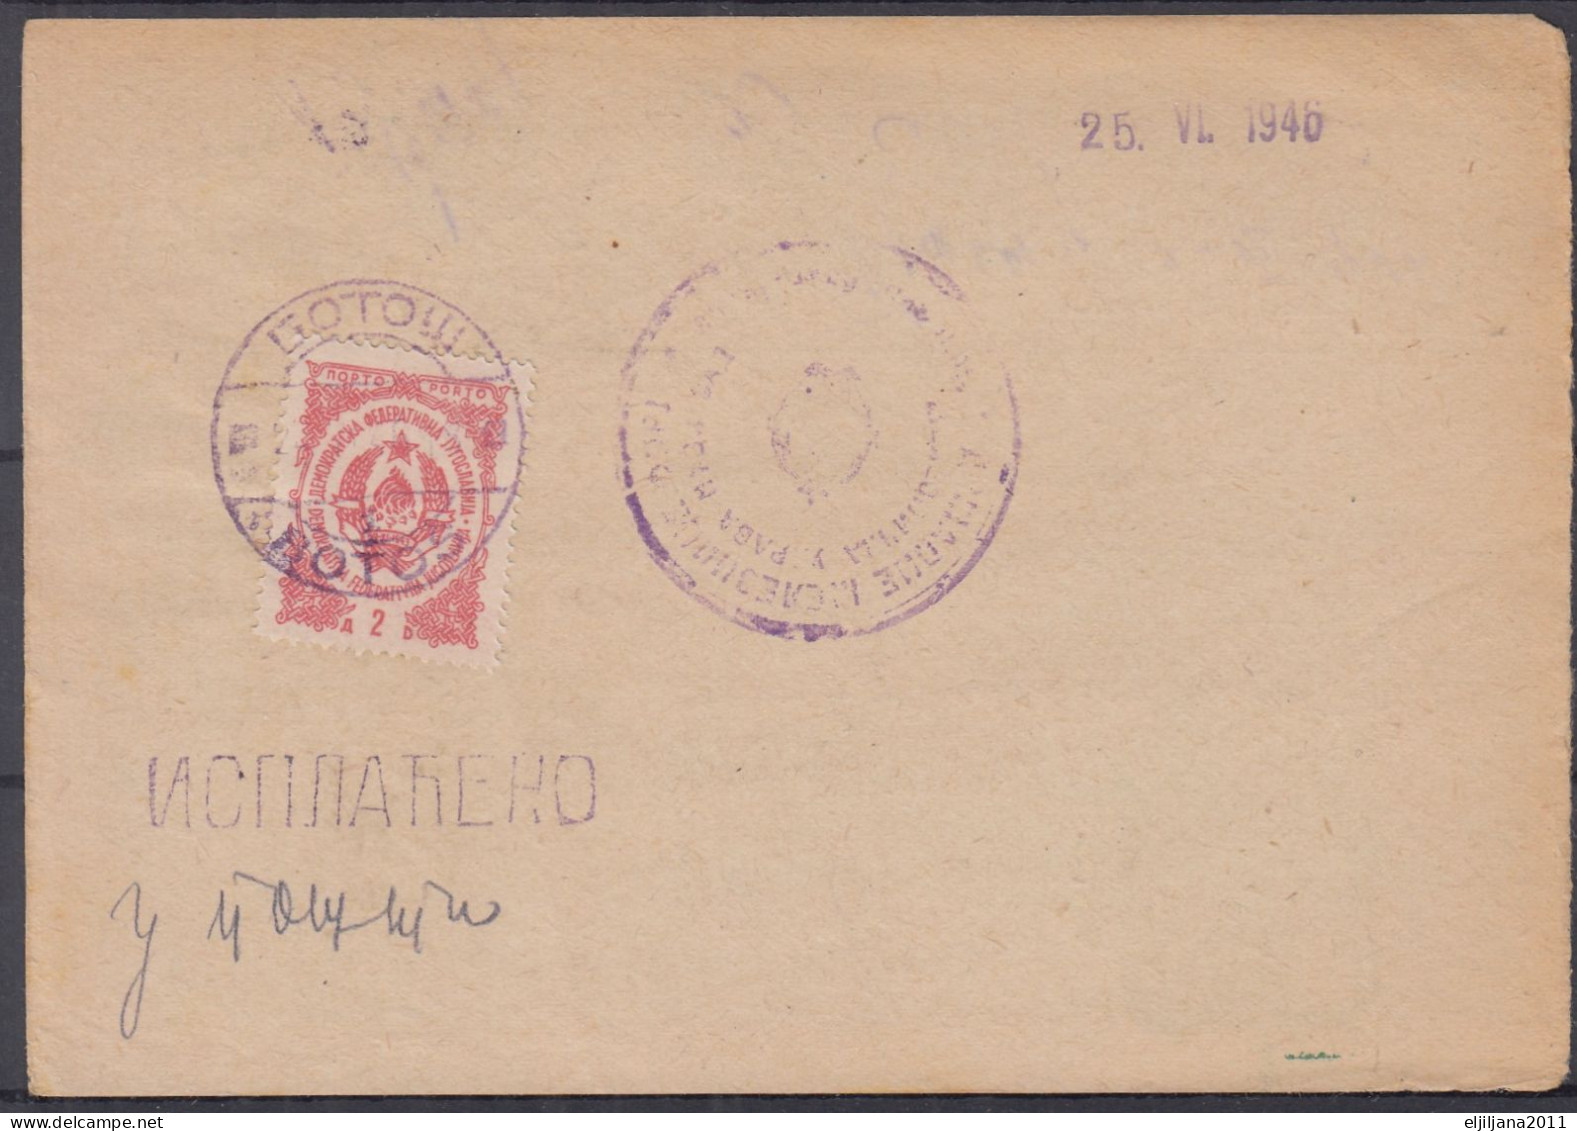 ⁕ Yugoslavia 1946 Serbia / Vojvodina ⁕ Postal Savings Bank Novi Sad / Money Order Receipt - PORTO - Official ⁕ BOTOŠ - Portomarken